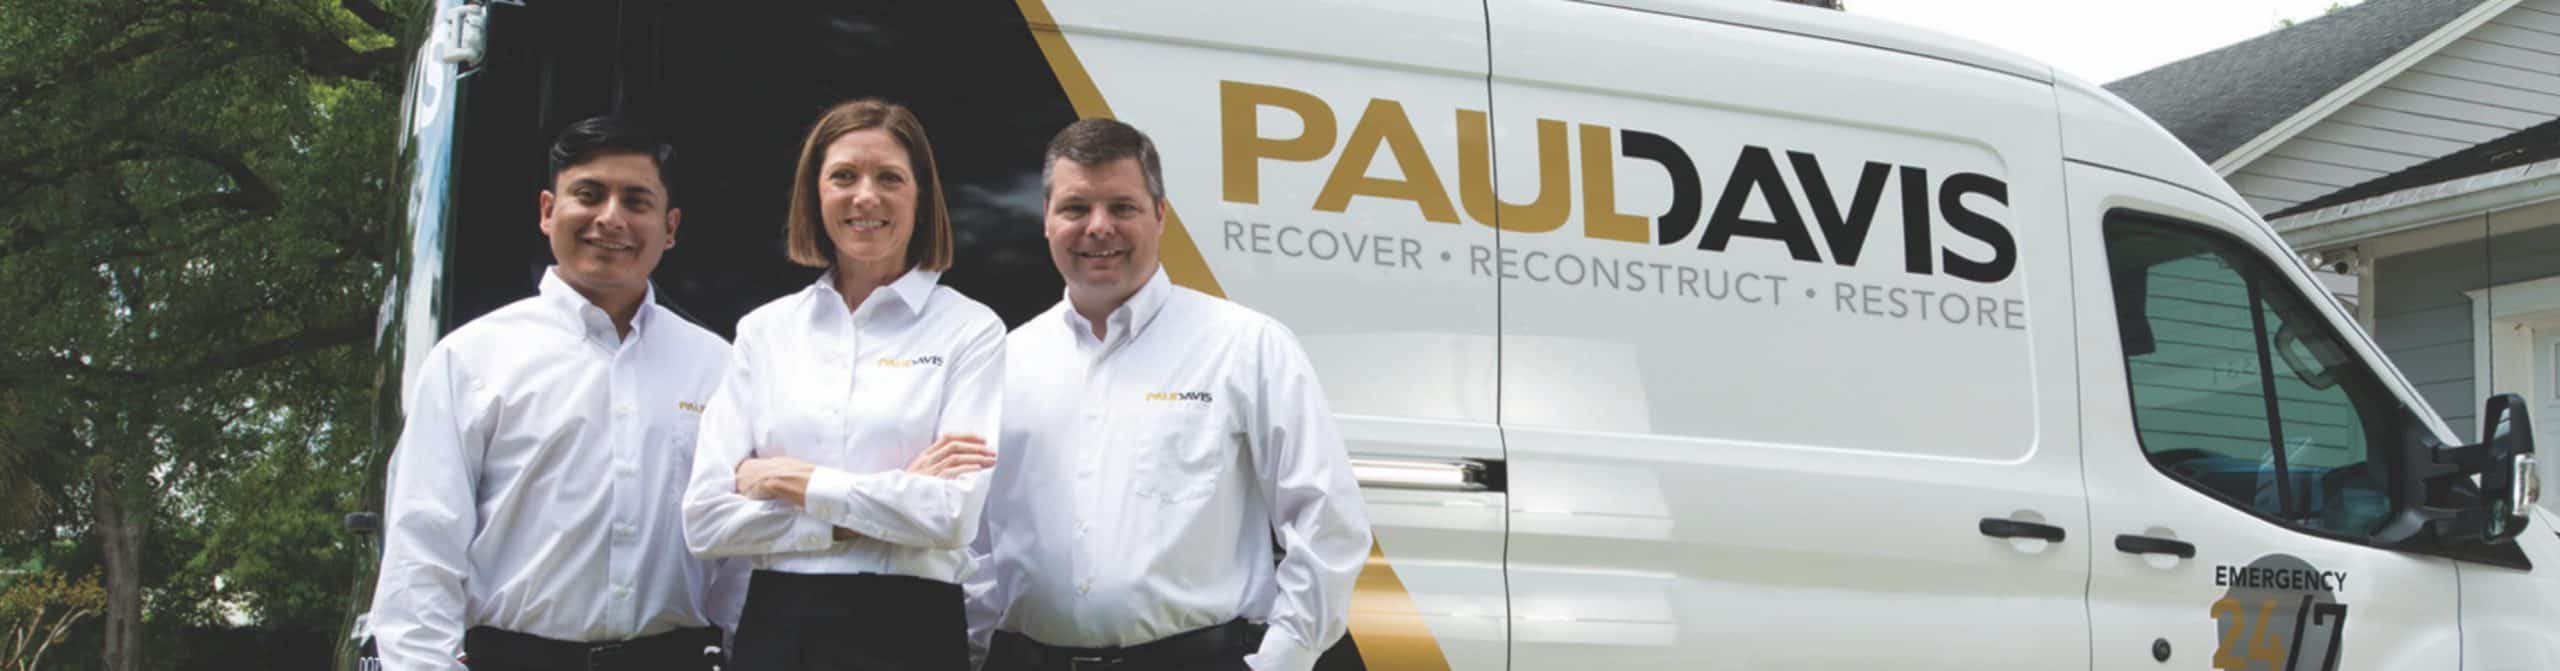 paul davis recover reconstruct restore